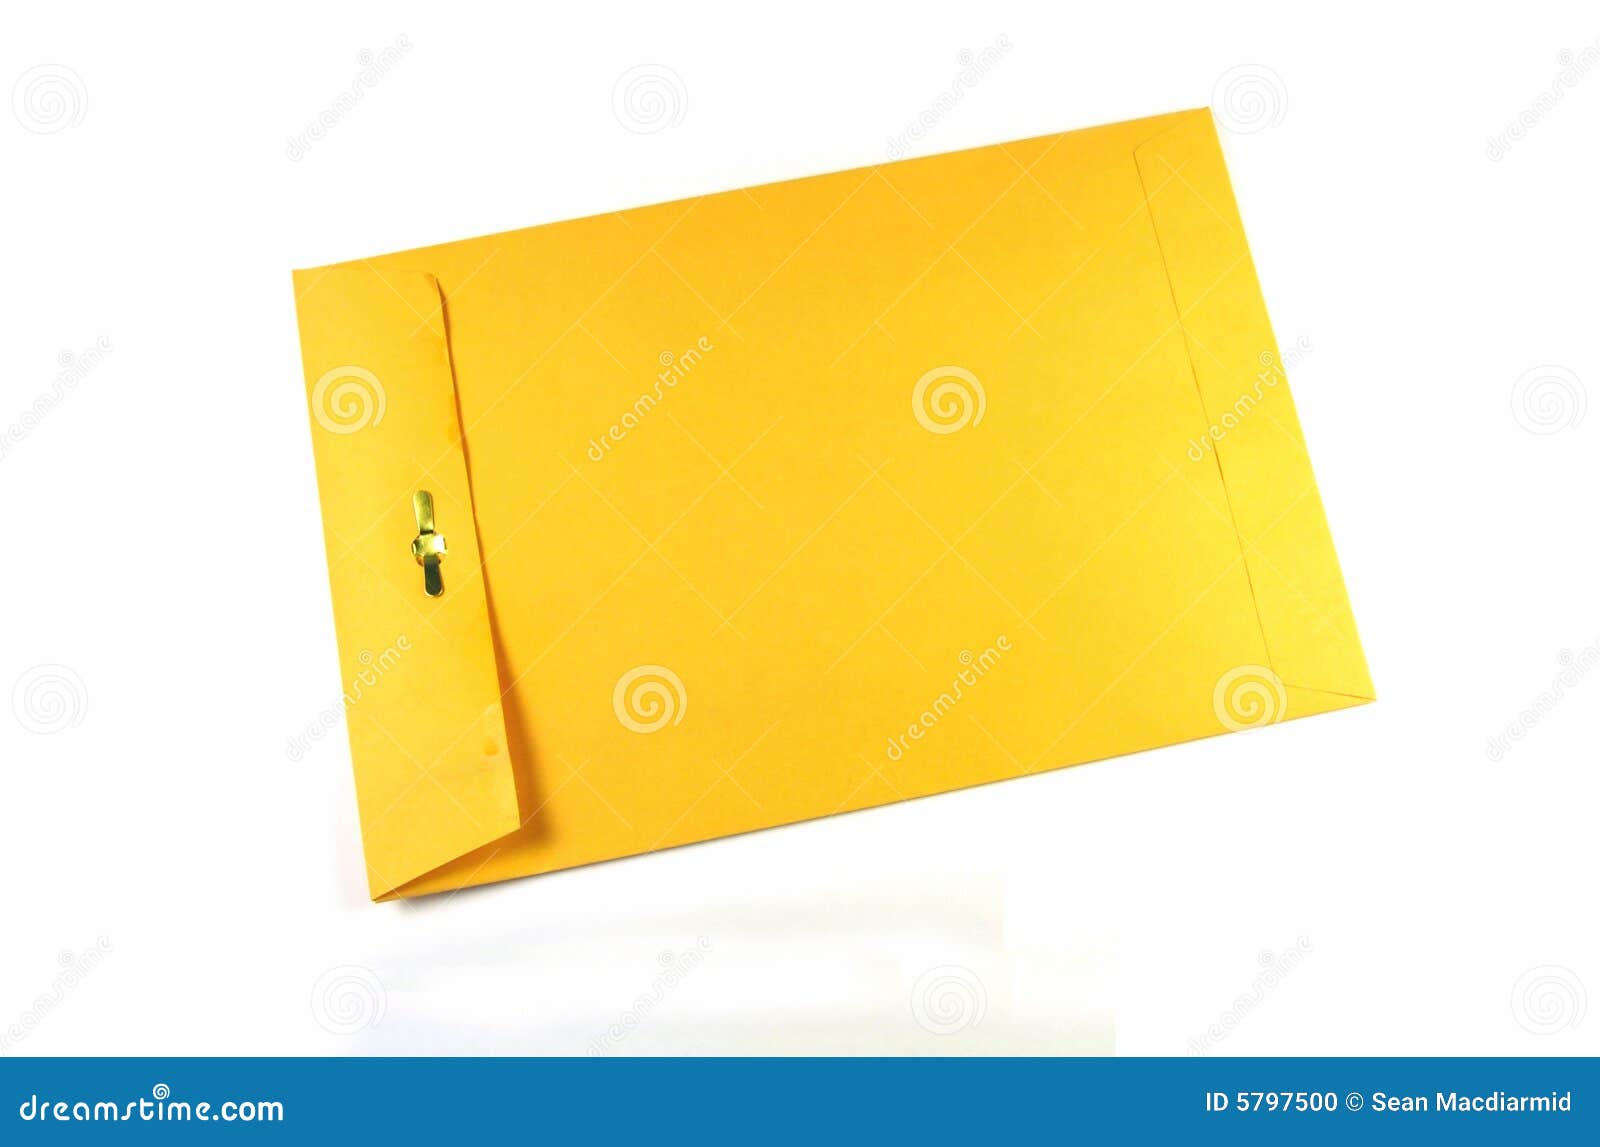 manilla envelope